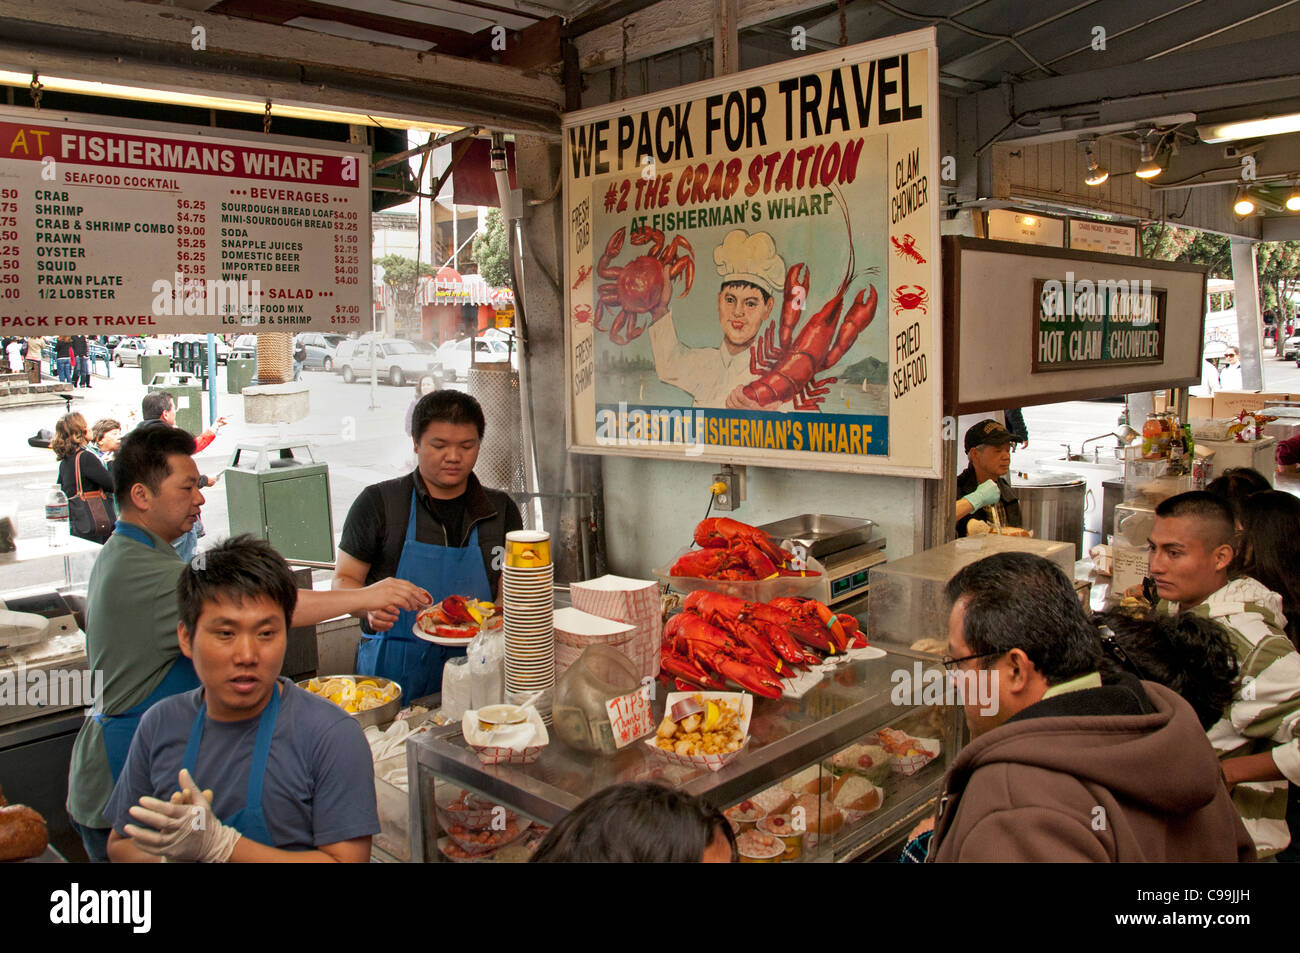 Fisherman's Wharf Lobster Restaurant San Francisco California United States Stock Photo